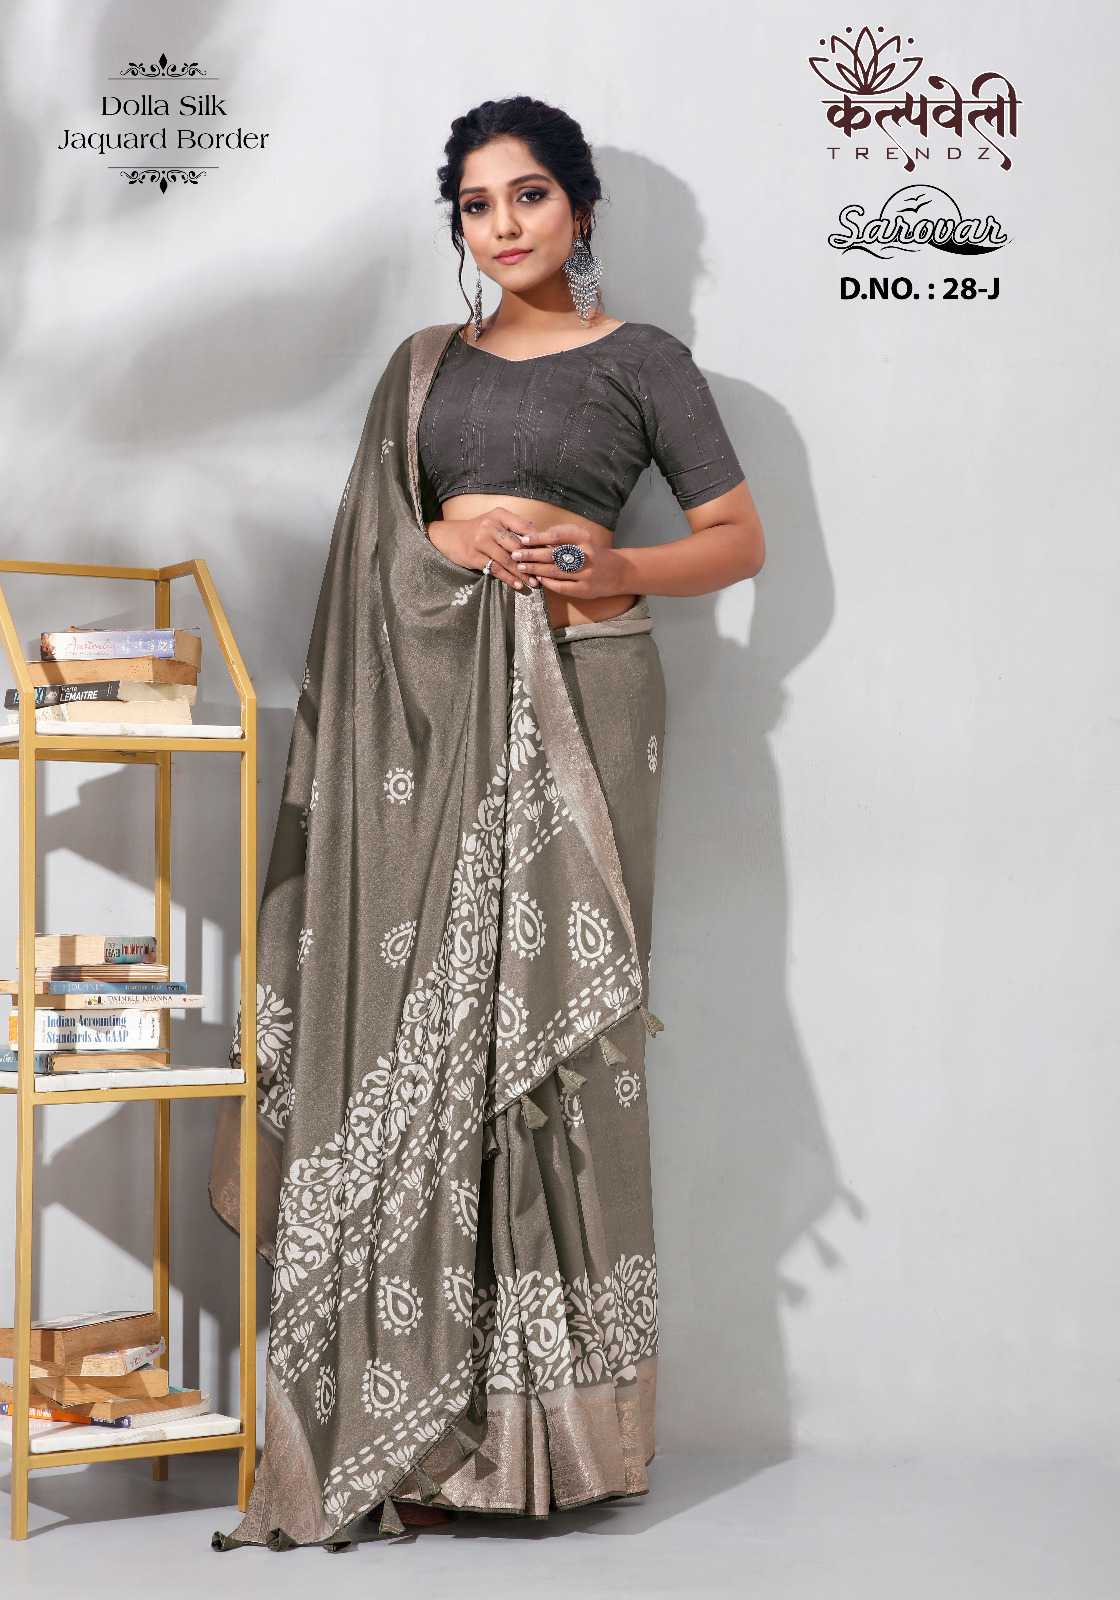 kalpavelly trendz sarovar 28 fancy batik print saree collection